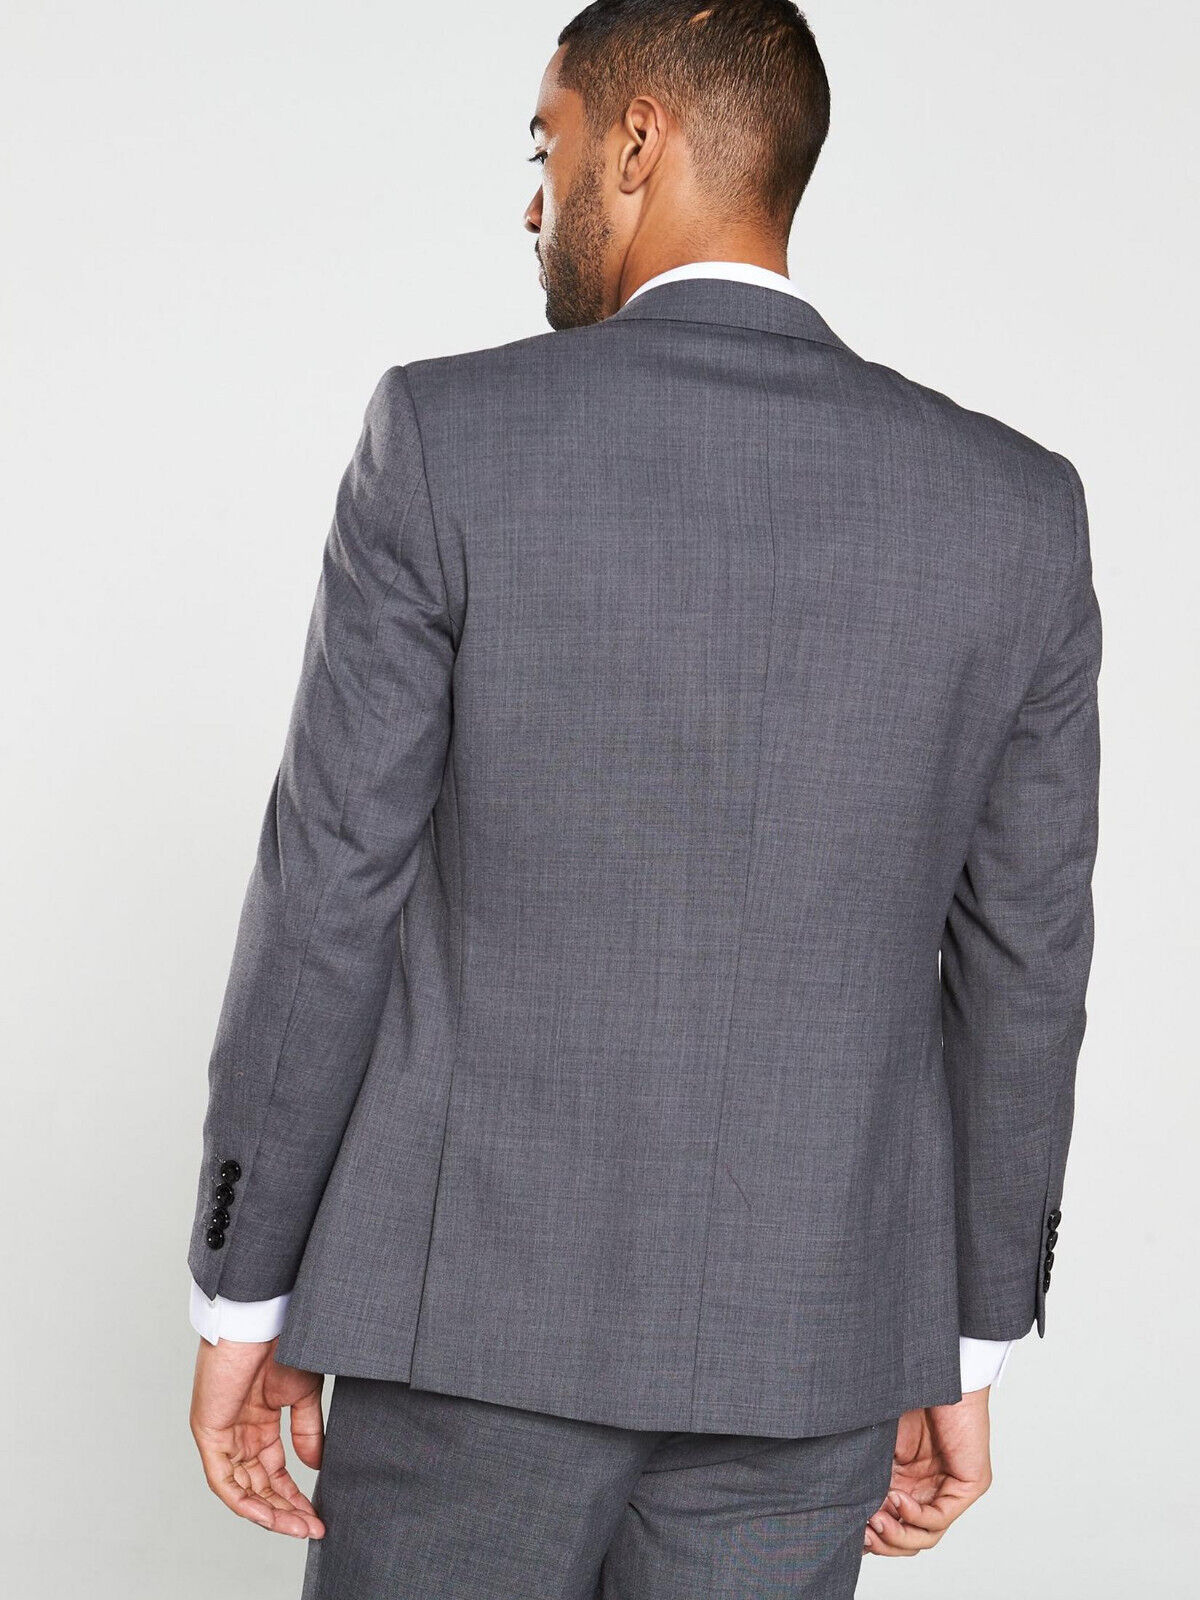 Skopes Farnham Tailored Fit Grey Jacket Size 38R *** V358